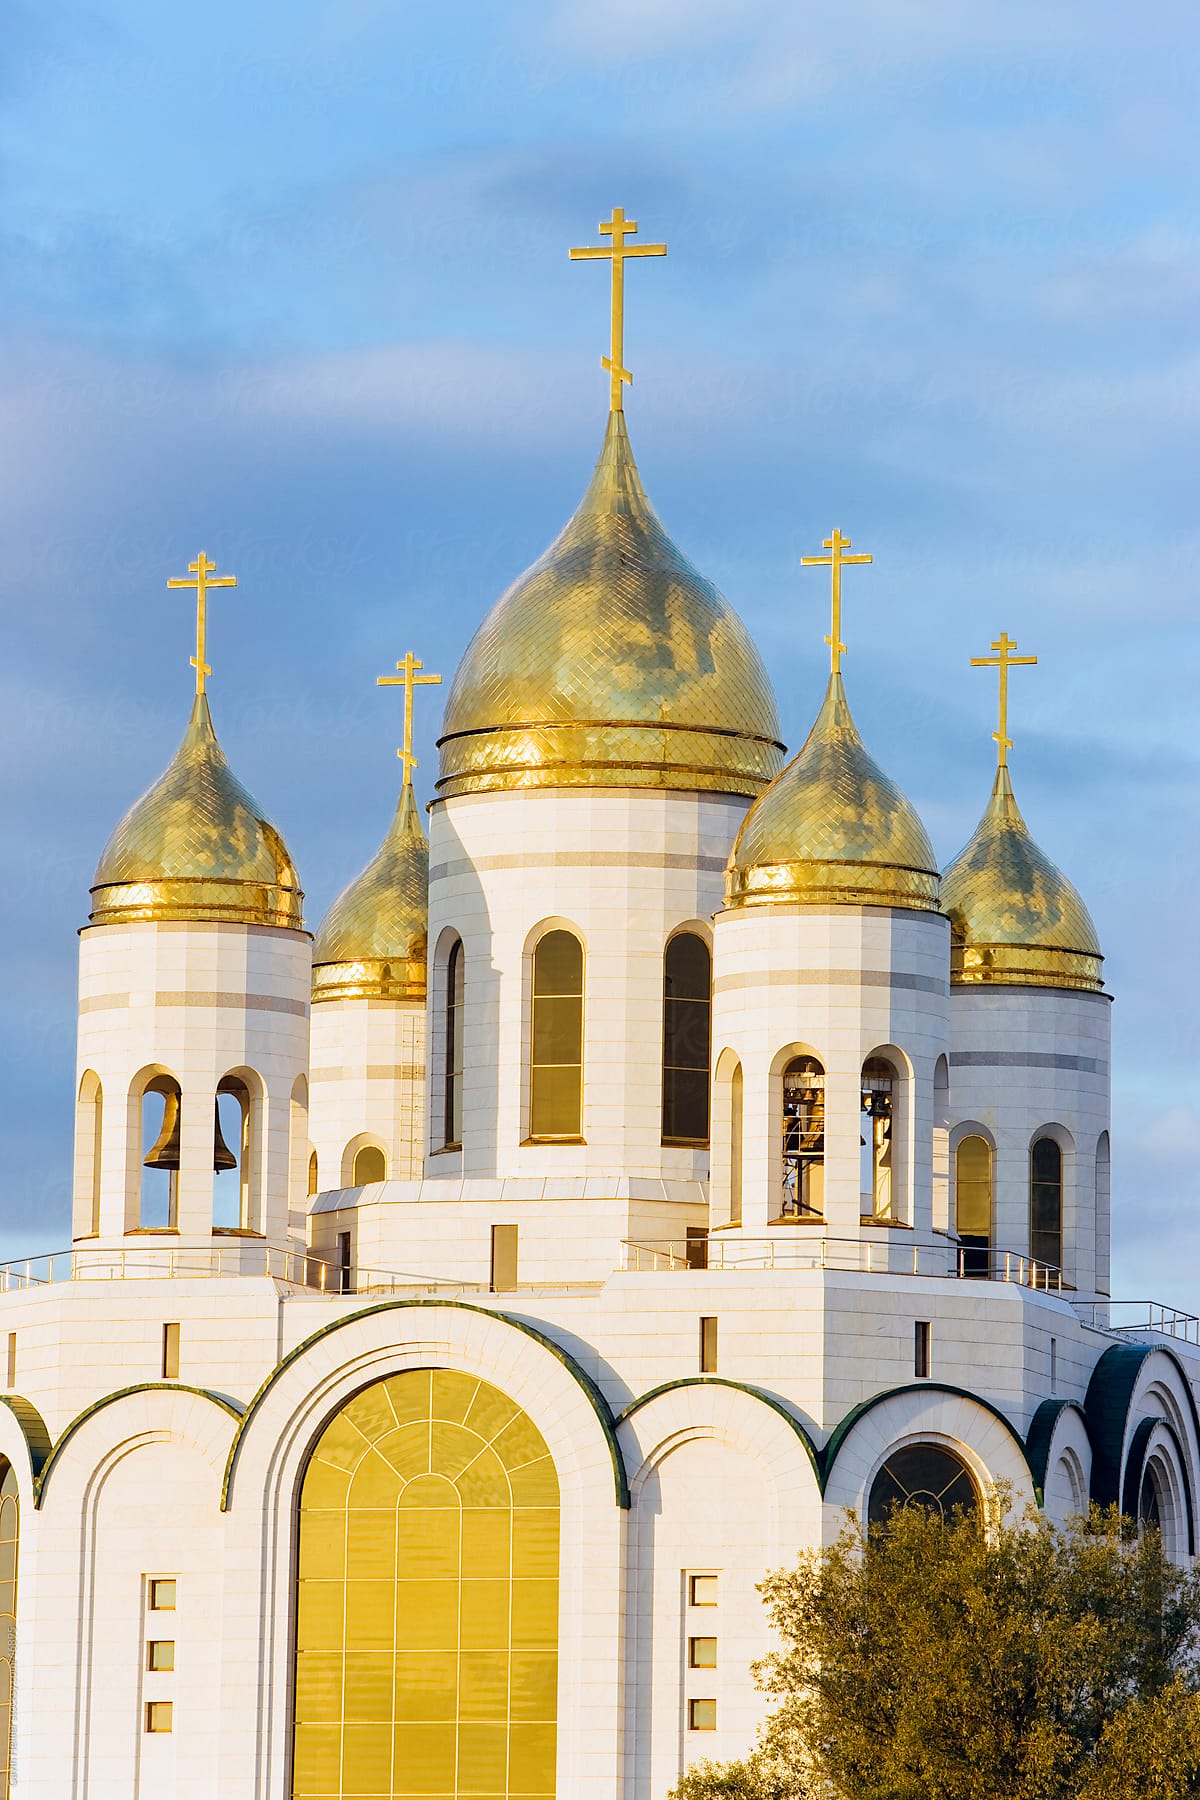 Russia, Kaliningrad, Ploshchad Pobedy (Pobedy Square), Cathedral of Christ the Saviour